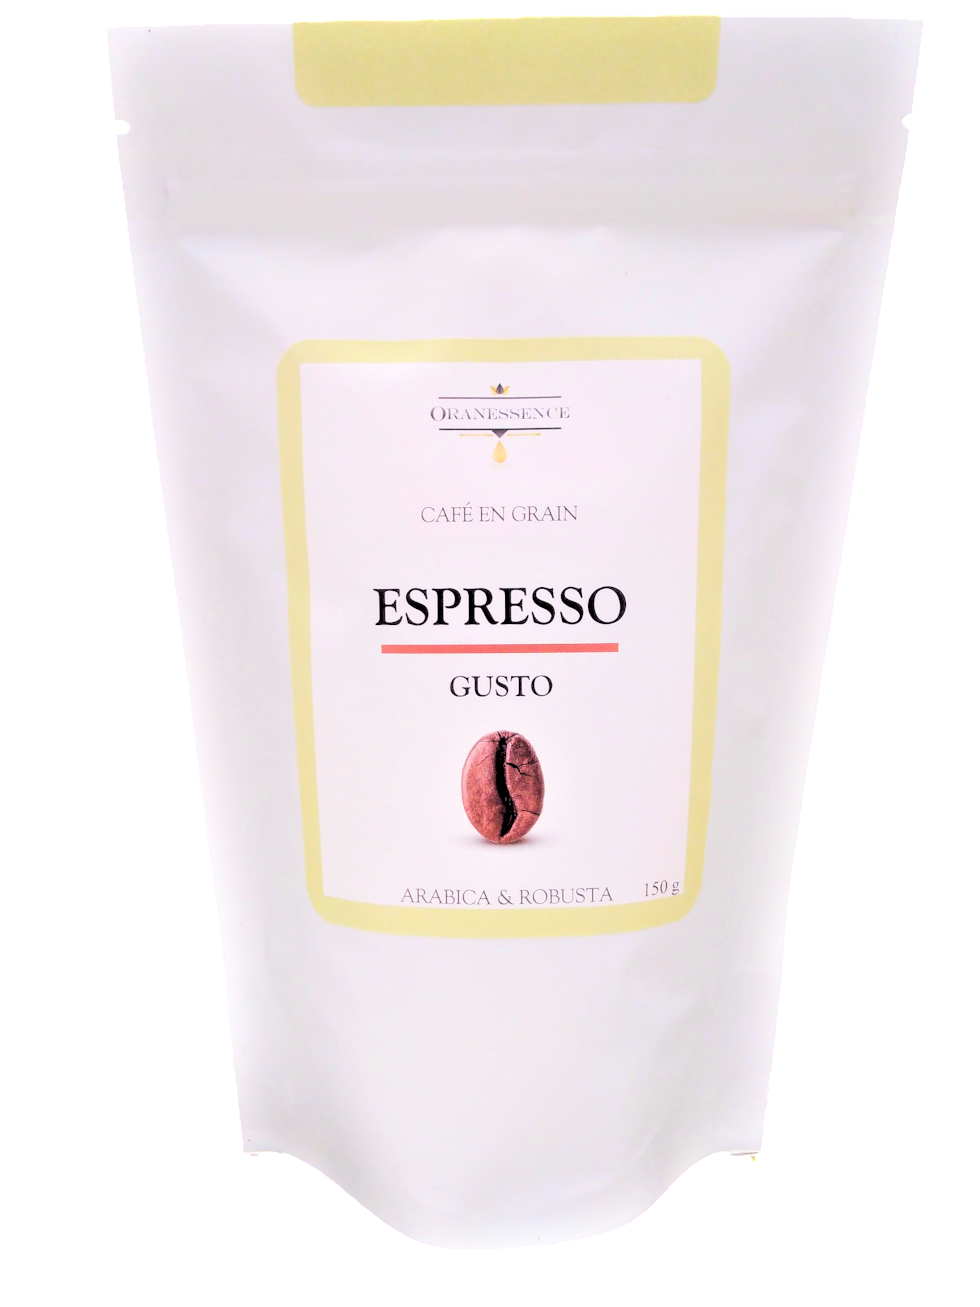 café-espresso-gusto-oranessence (2)